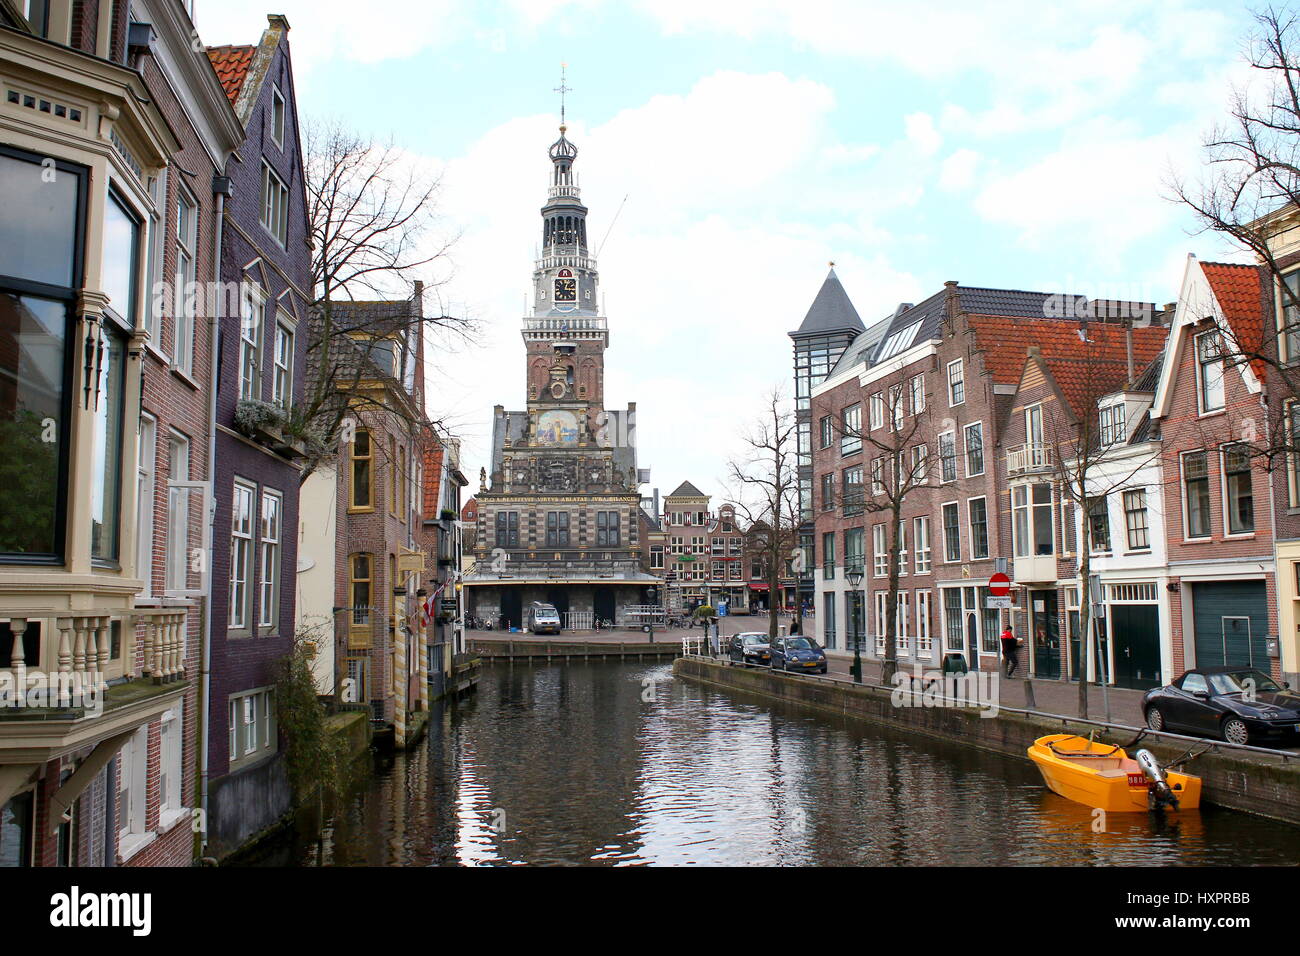 Inizio del XVII secolo Waag (casa di pesatura) a piazza Waagplein a Alkmaar, Paesi Bassi. Visto da Luttik Oudorp / Zijdam canal Foto Stock